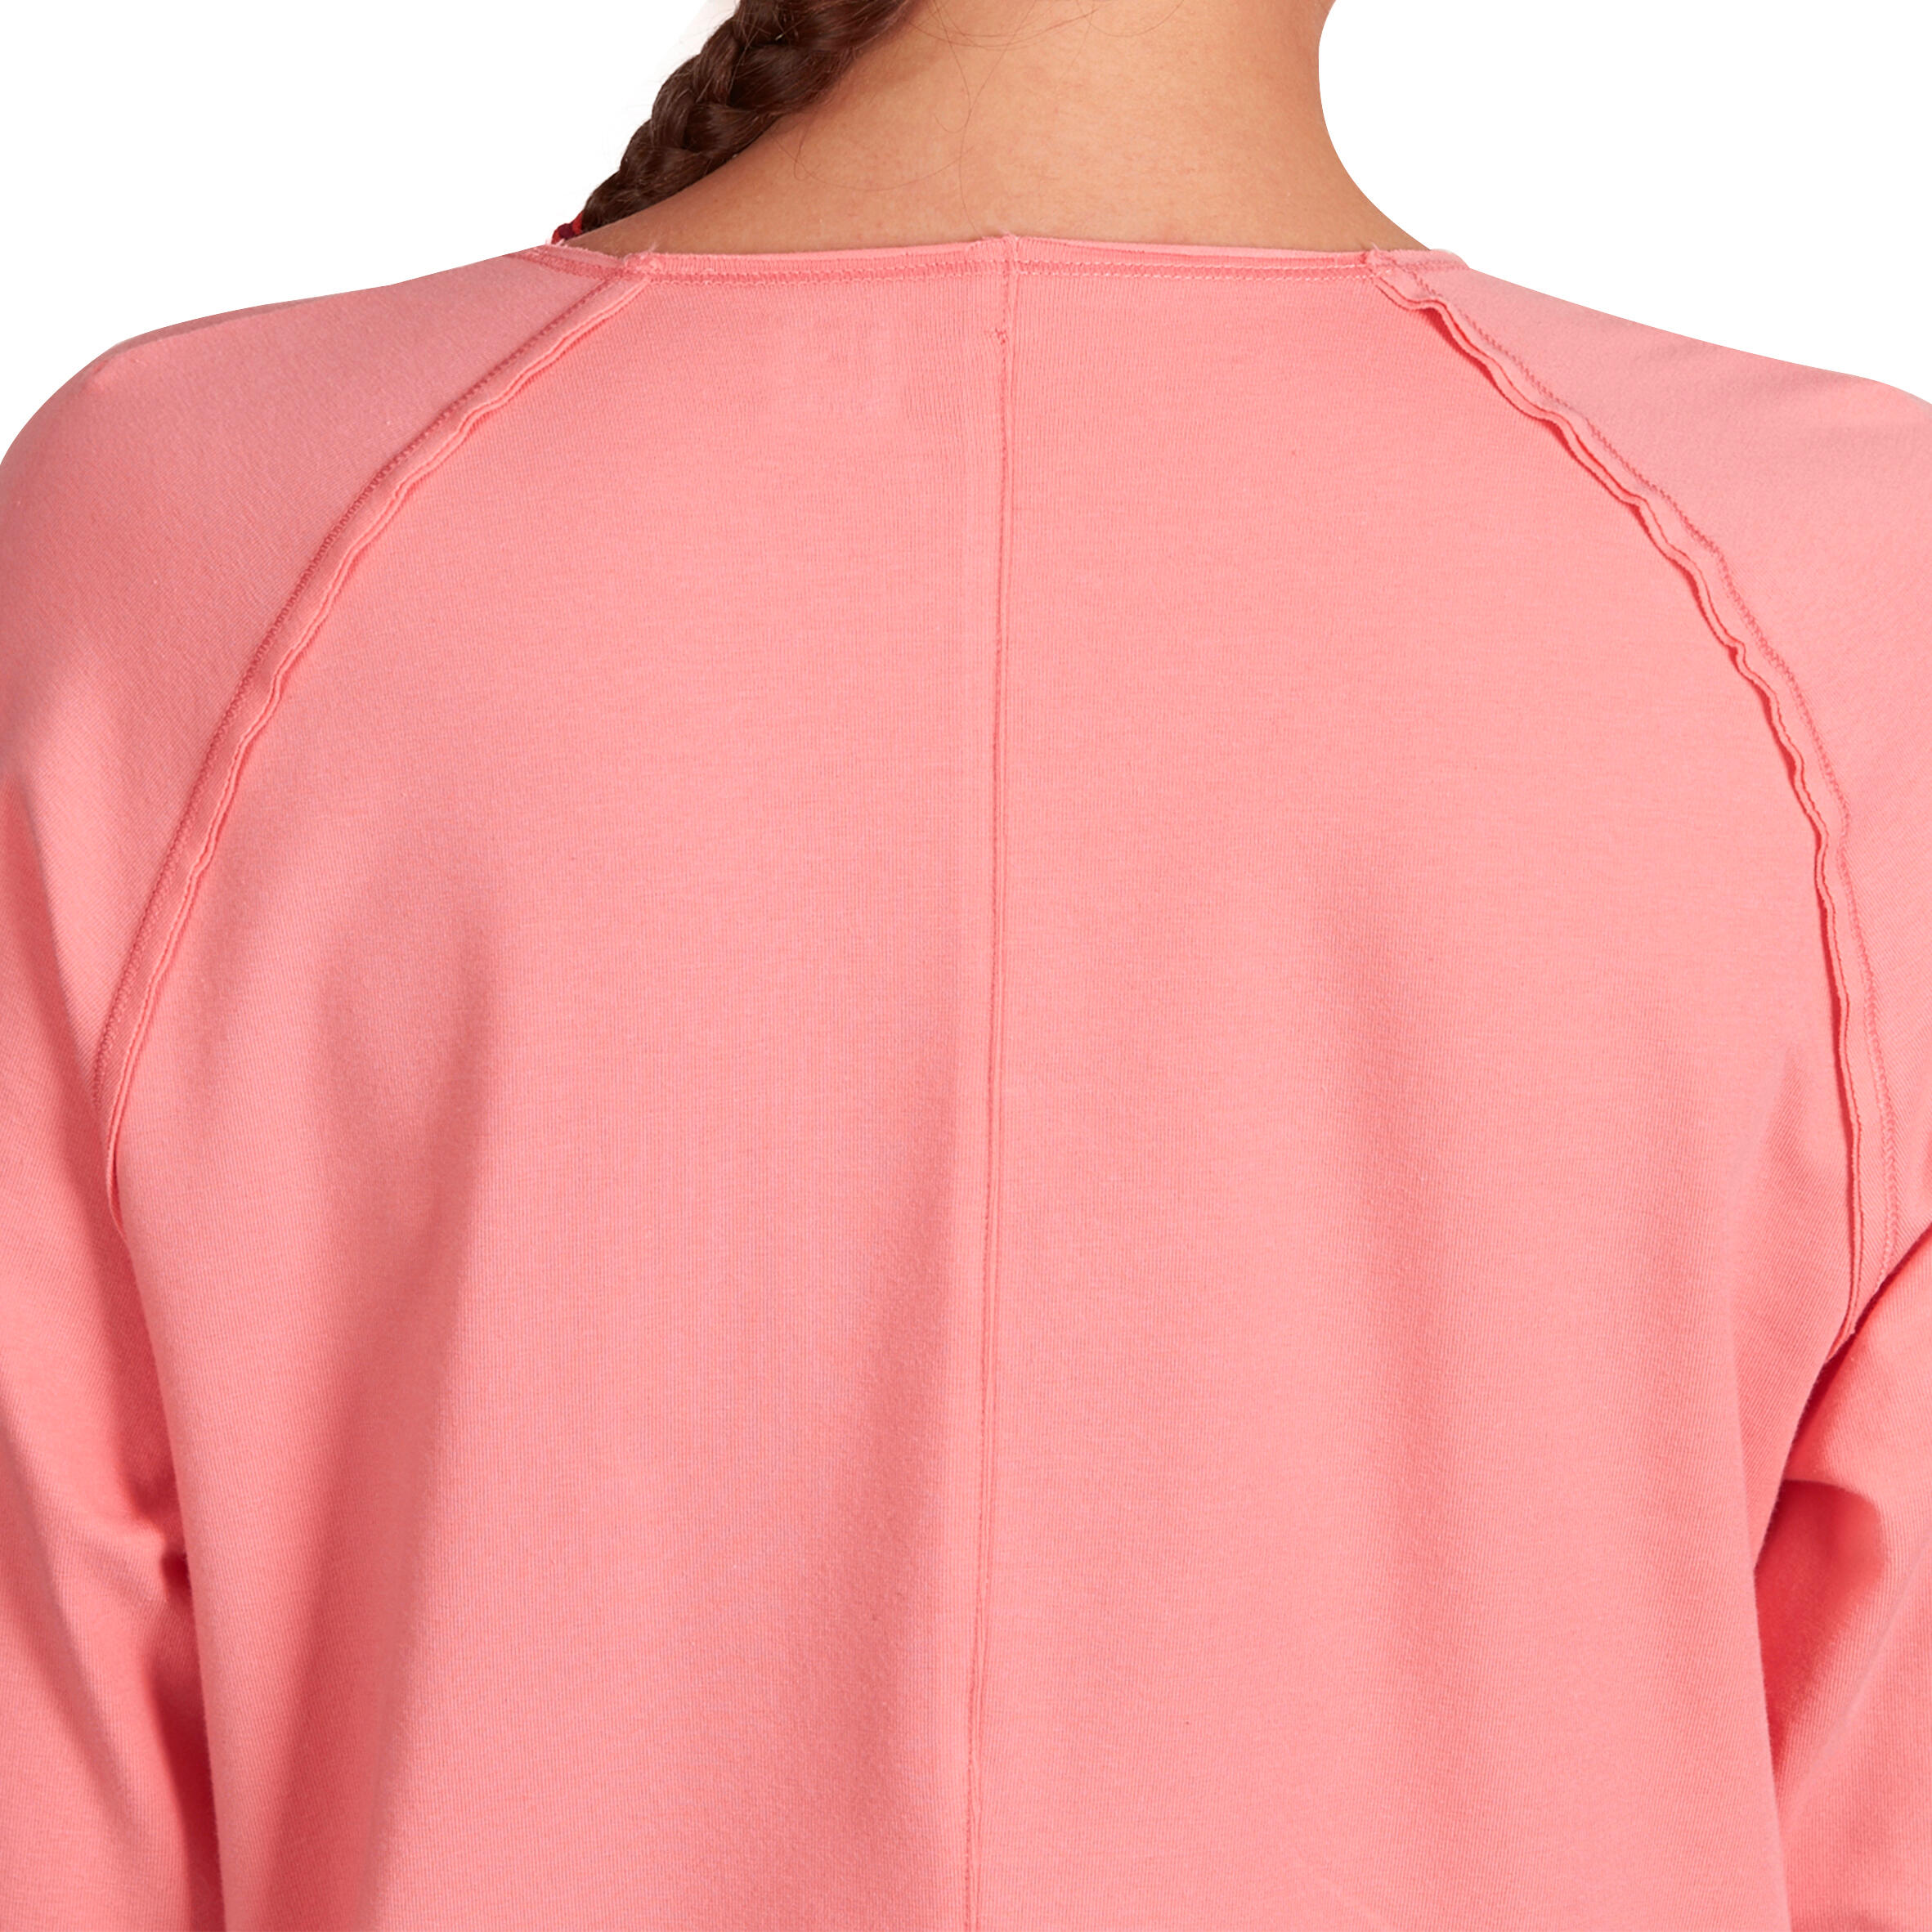 Women's Organic Cotton Long-Sleeved Yoga T-Shirt - Coral 9/13